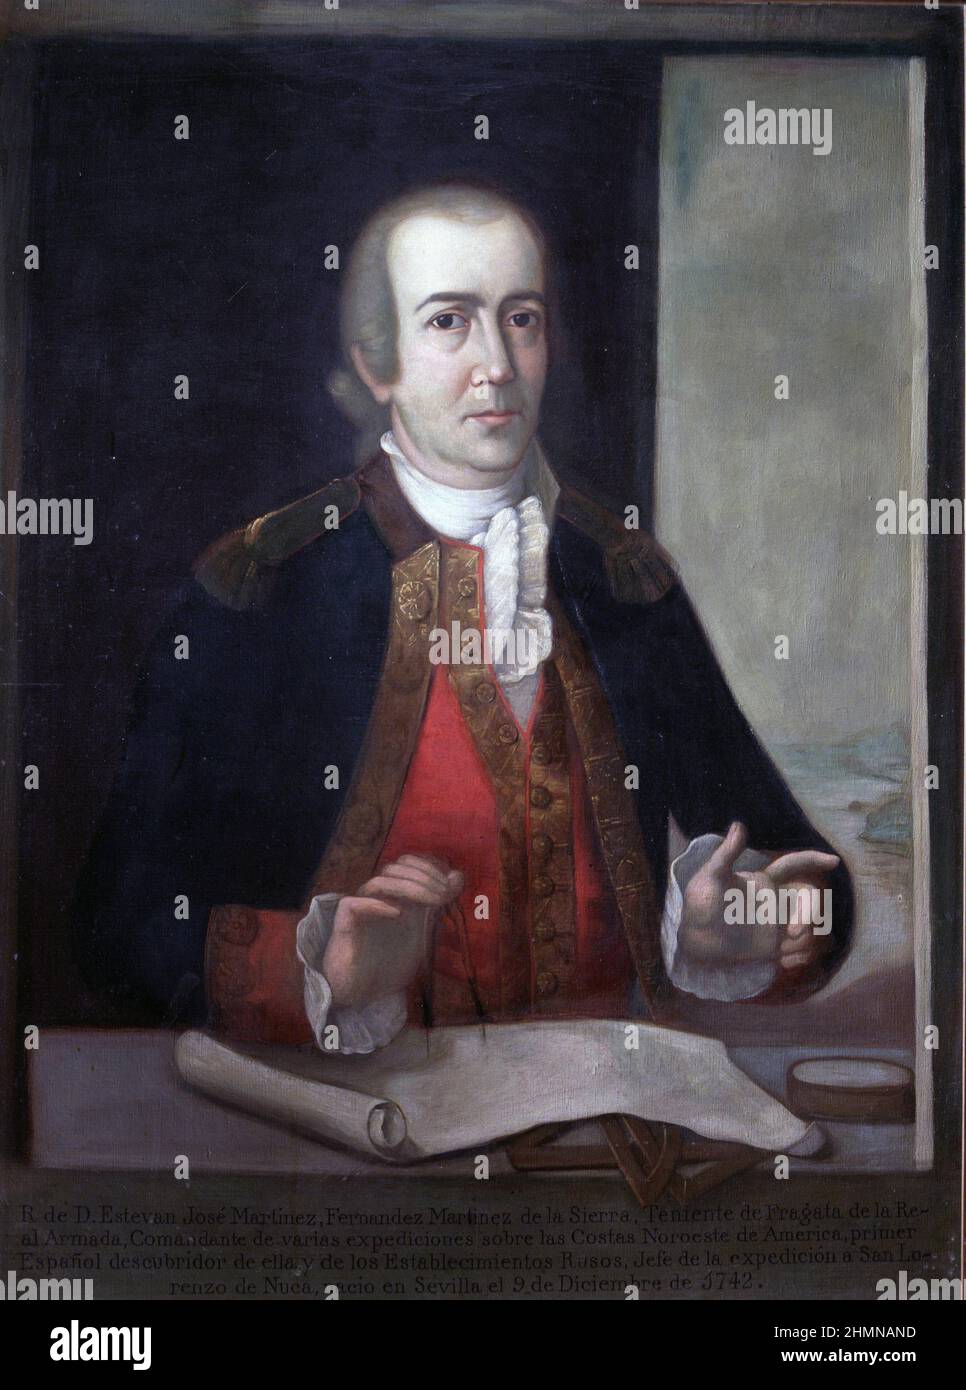 MARTINEZ , ESTEBAN JOSE. MARINO ESPAÑOL . SEVILLA 1742 - 1798. DESCUBRIDOR DE LA COSTA NOROESTE DE AMERICA. OLEO ANONIMO. MUSEO NAVAL . MADRID. Stock Photo